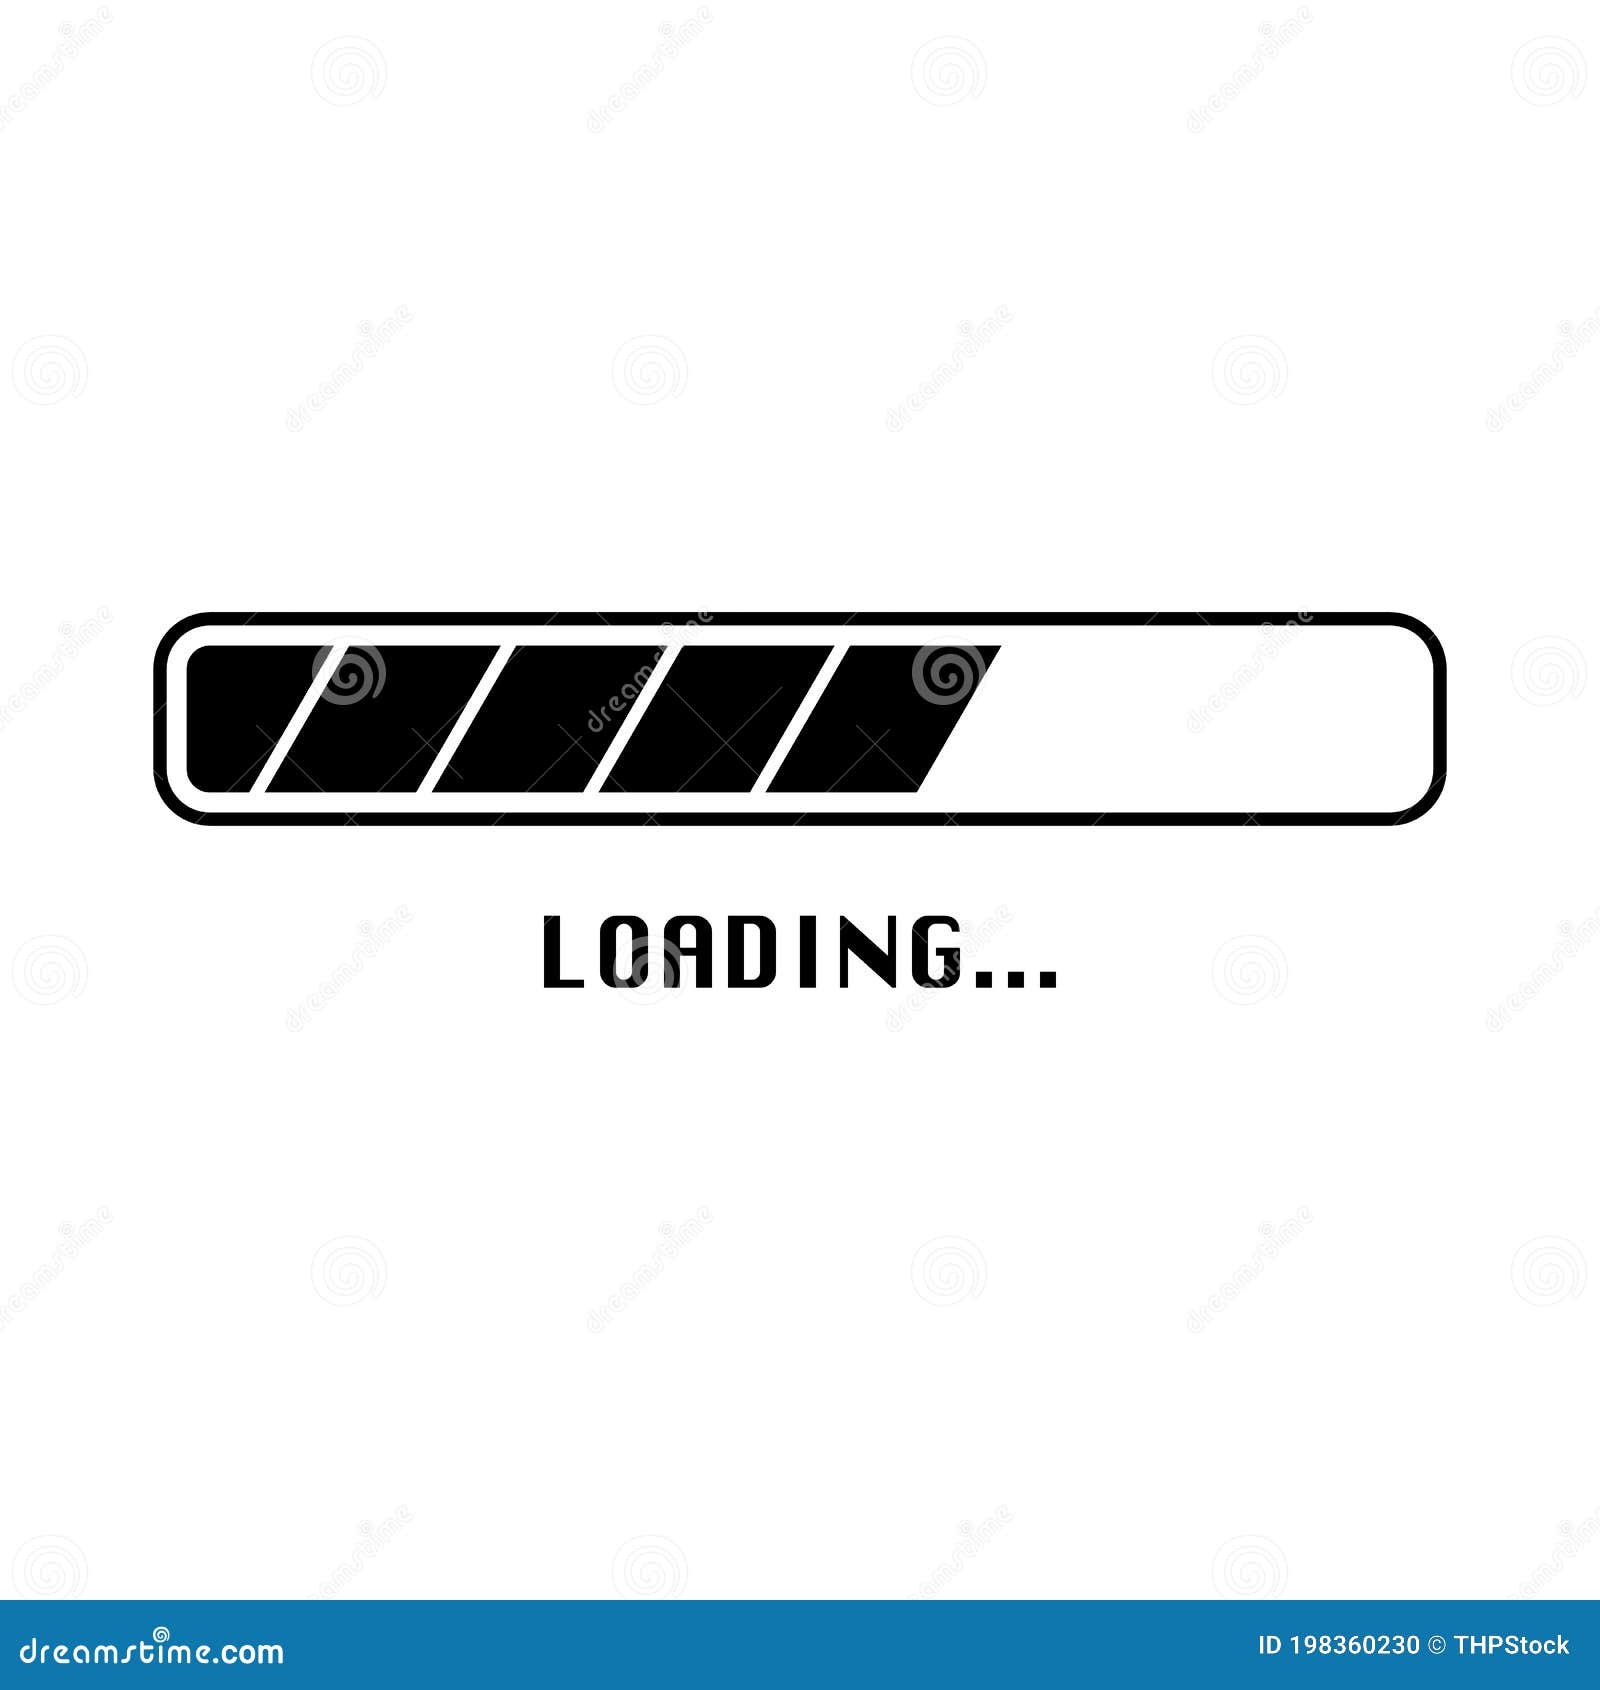 loading progress bar 